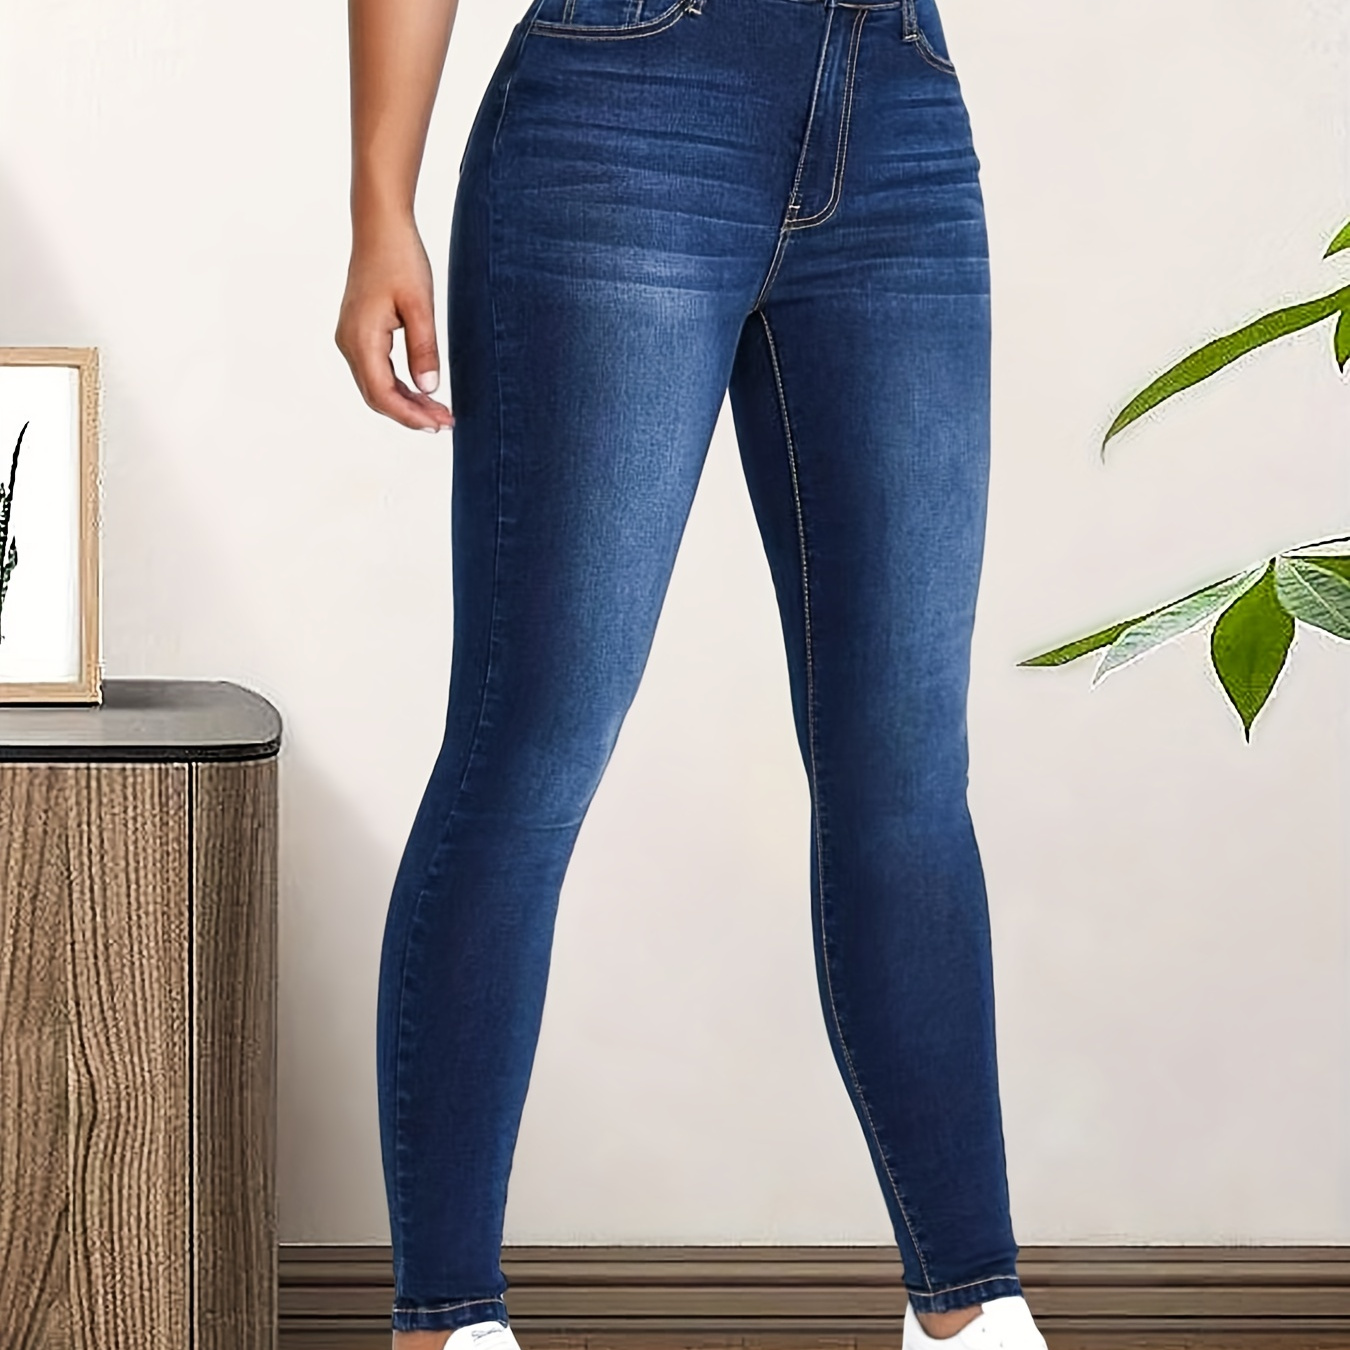 Shaping Skinny High Jeans - Dark denim blue - Ladies